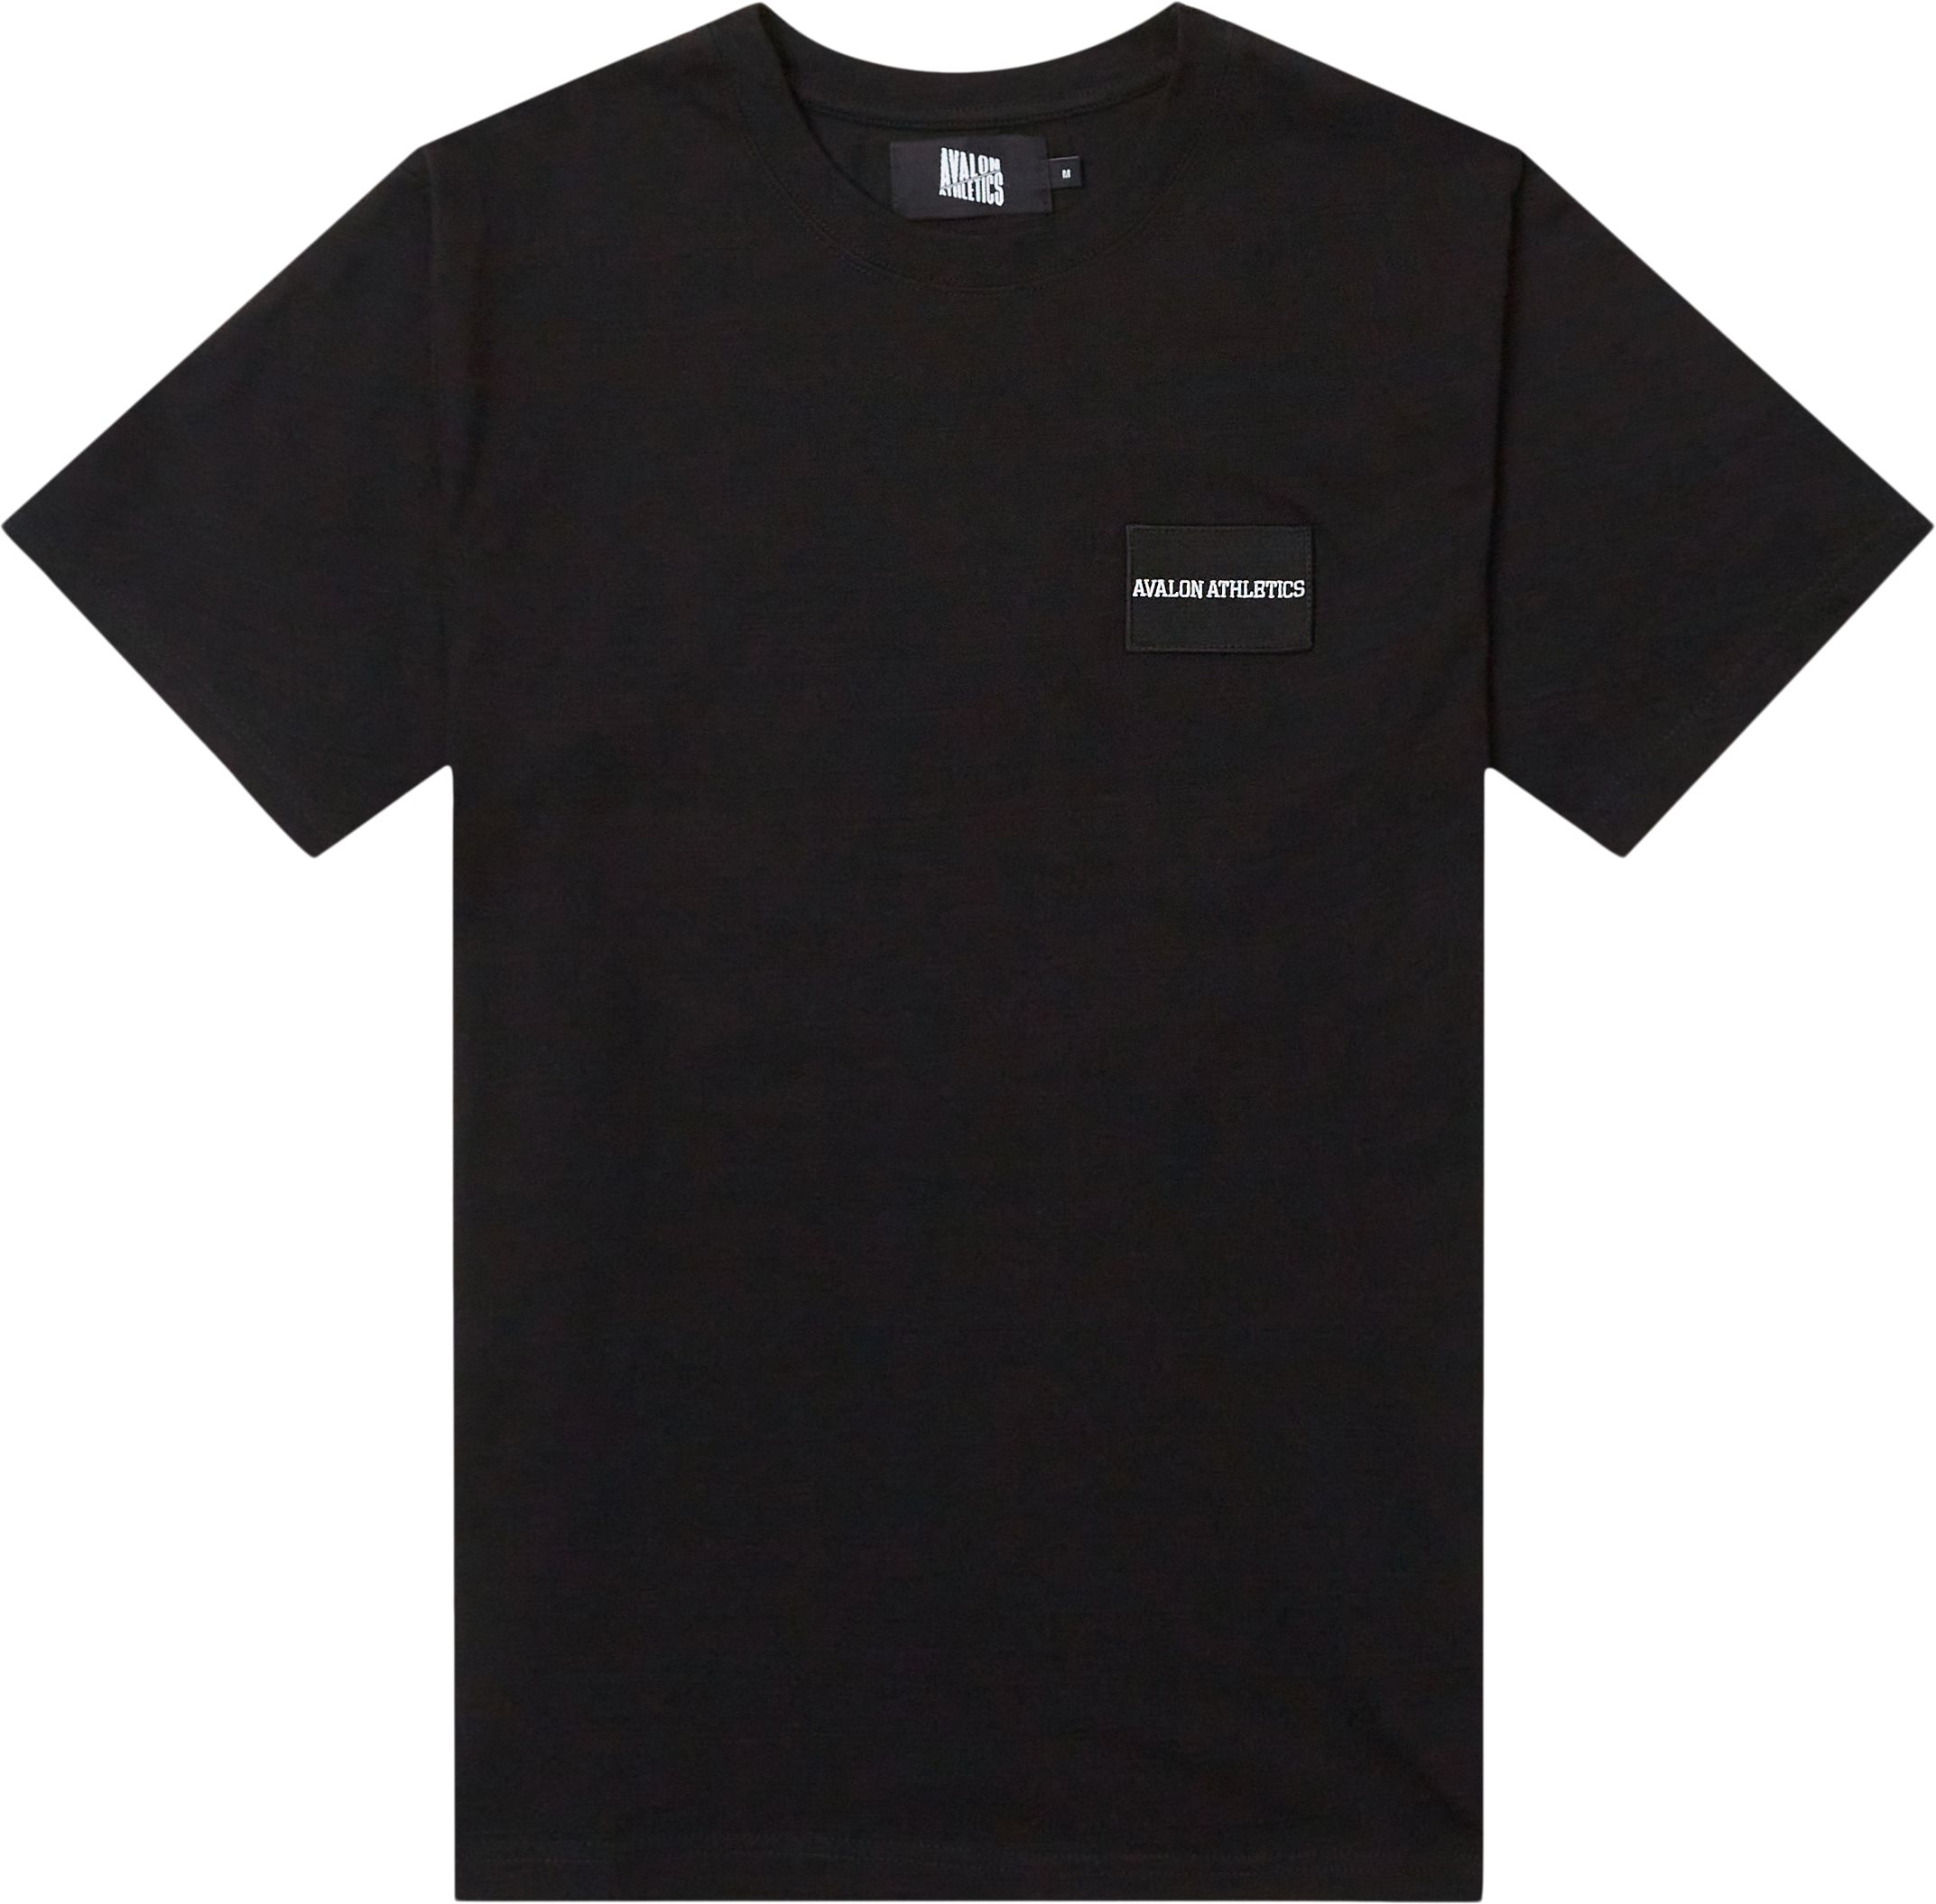 Fisher Tee - T-shirts - Regular fit - Black